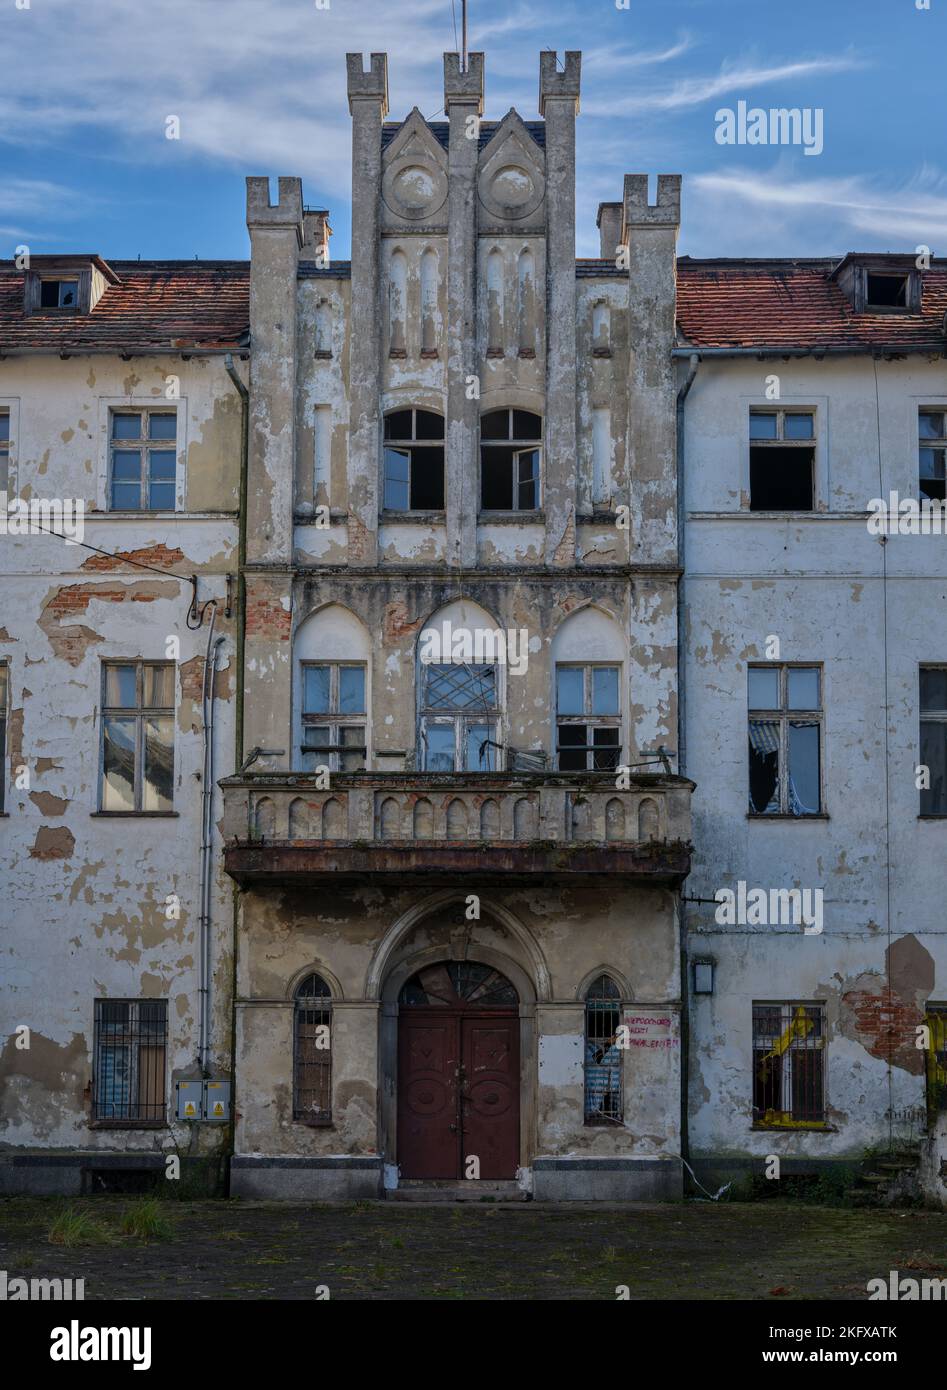 Abandoned palace in Dobrocin Lower Silesia Poland Stock Photo